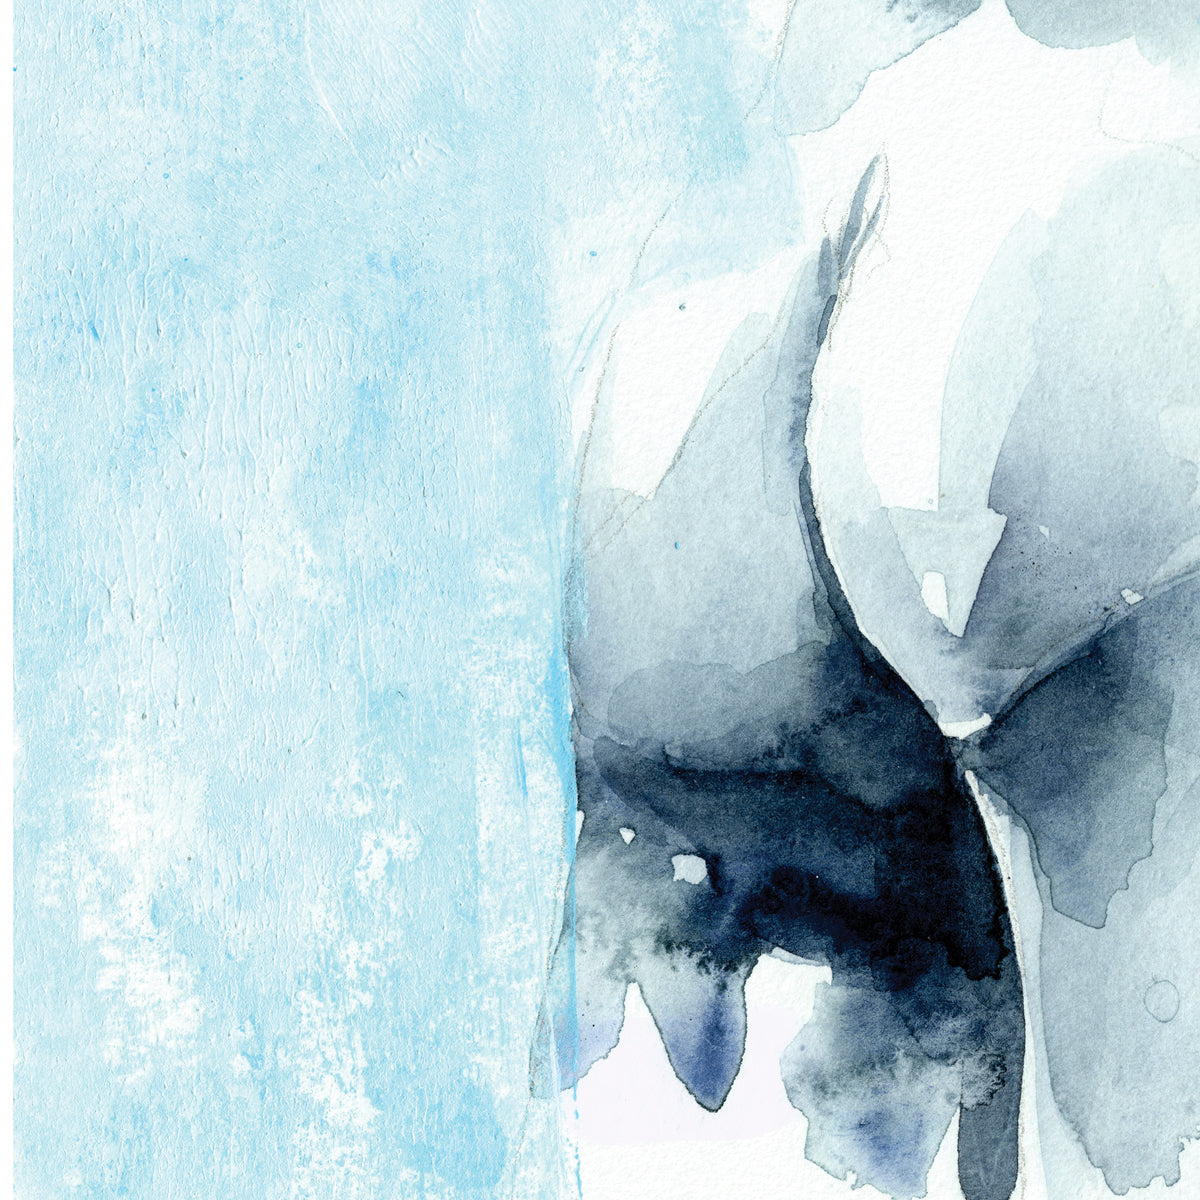 Muscular Man in Waterfall, Showing Buttocks - Giclee Art Print